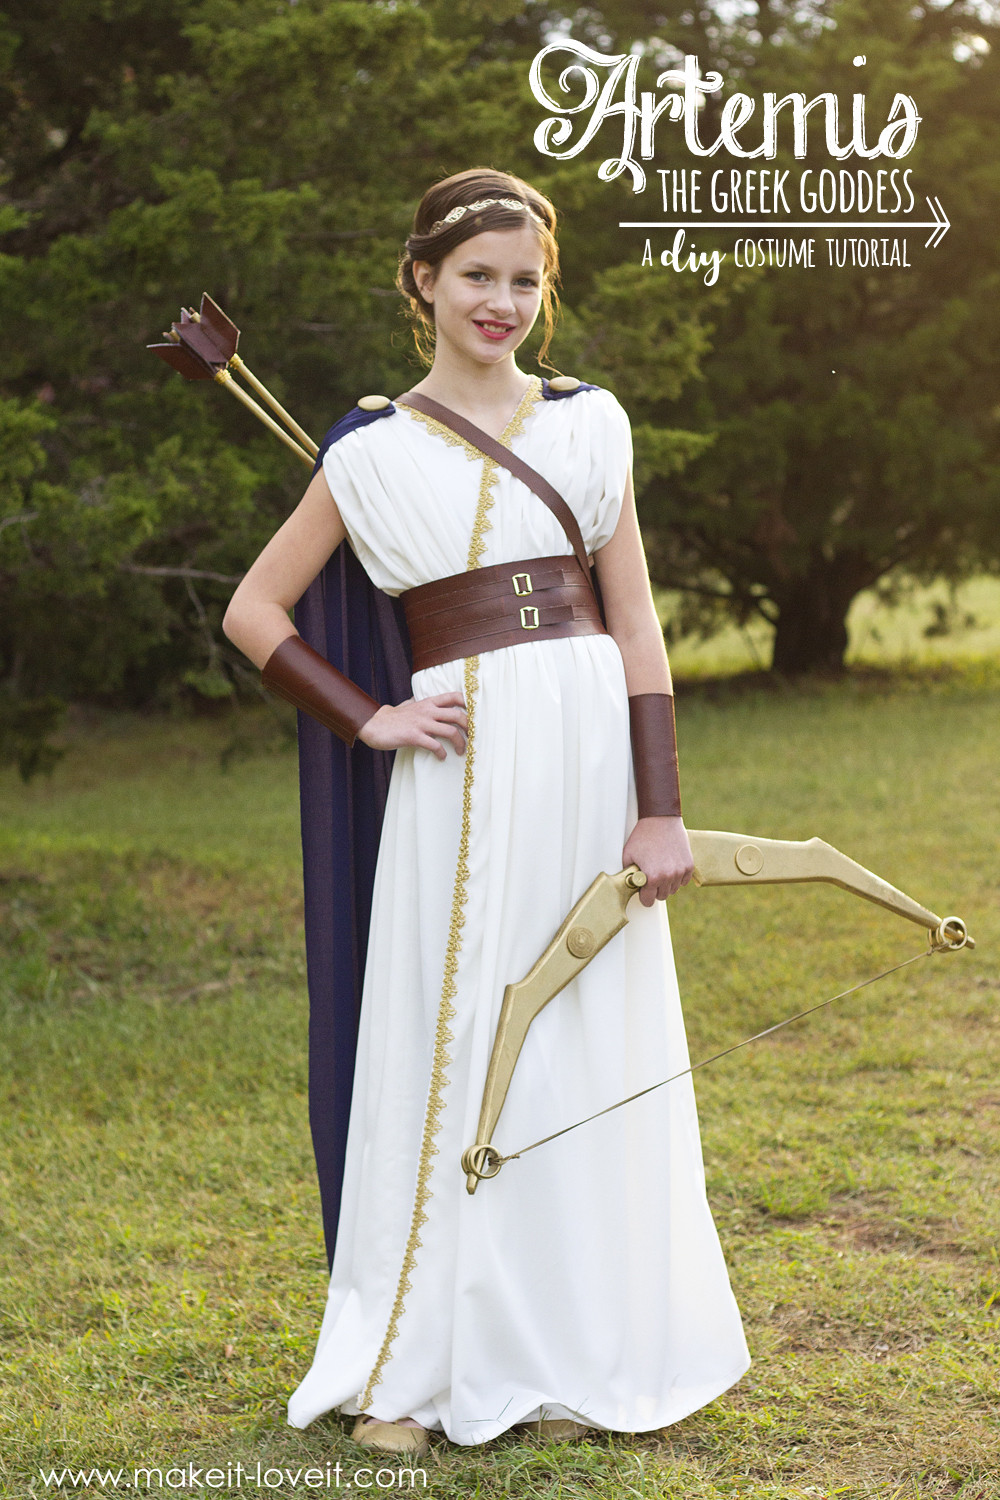 Best ideas about Greek God Costumes DIY
. Save or Pin DIY Greek Goddess Costume ARTEMIS Now.